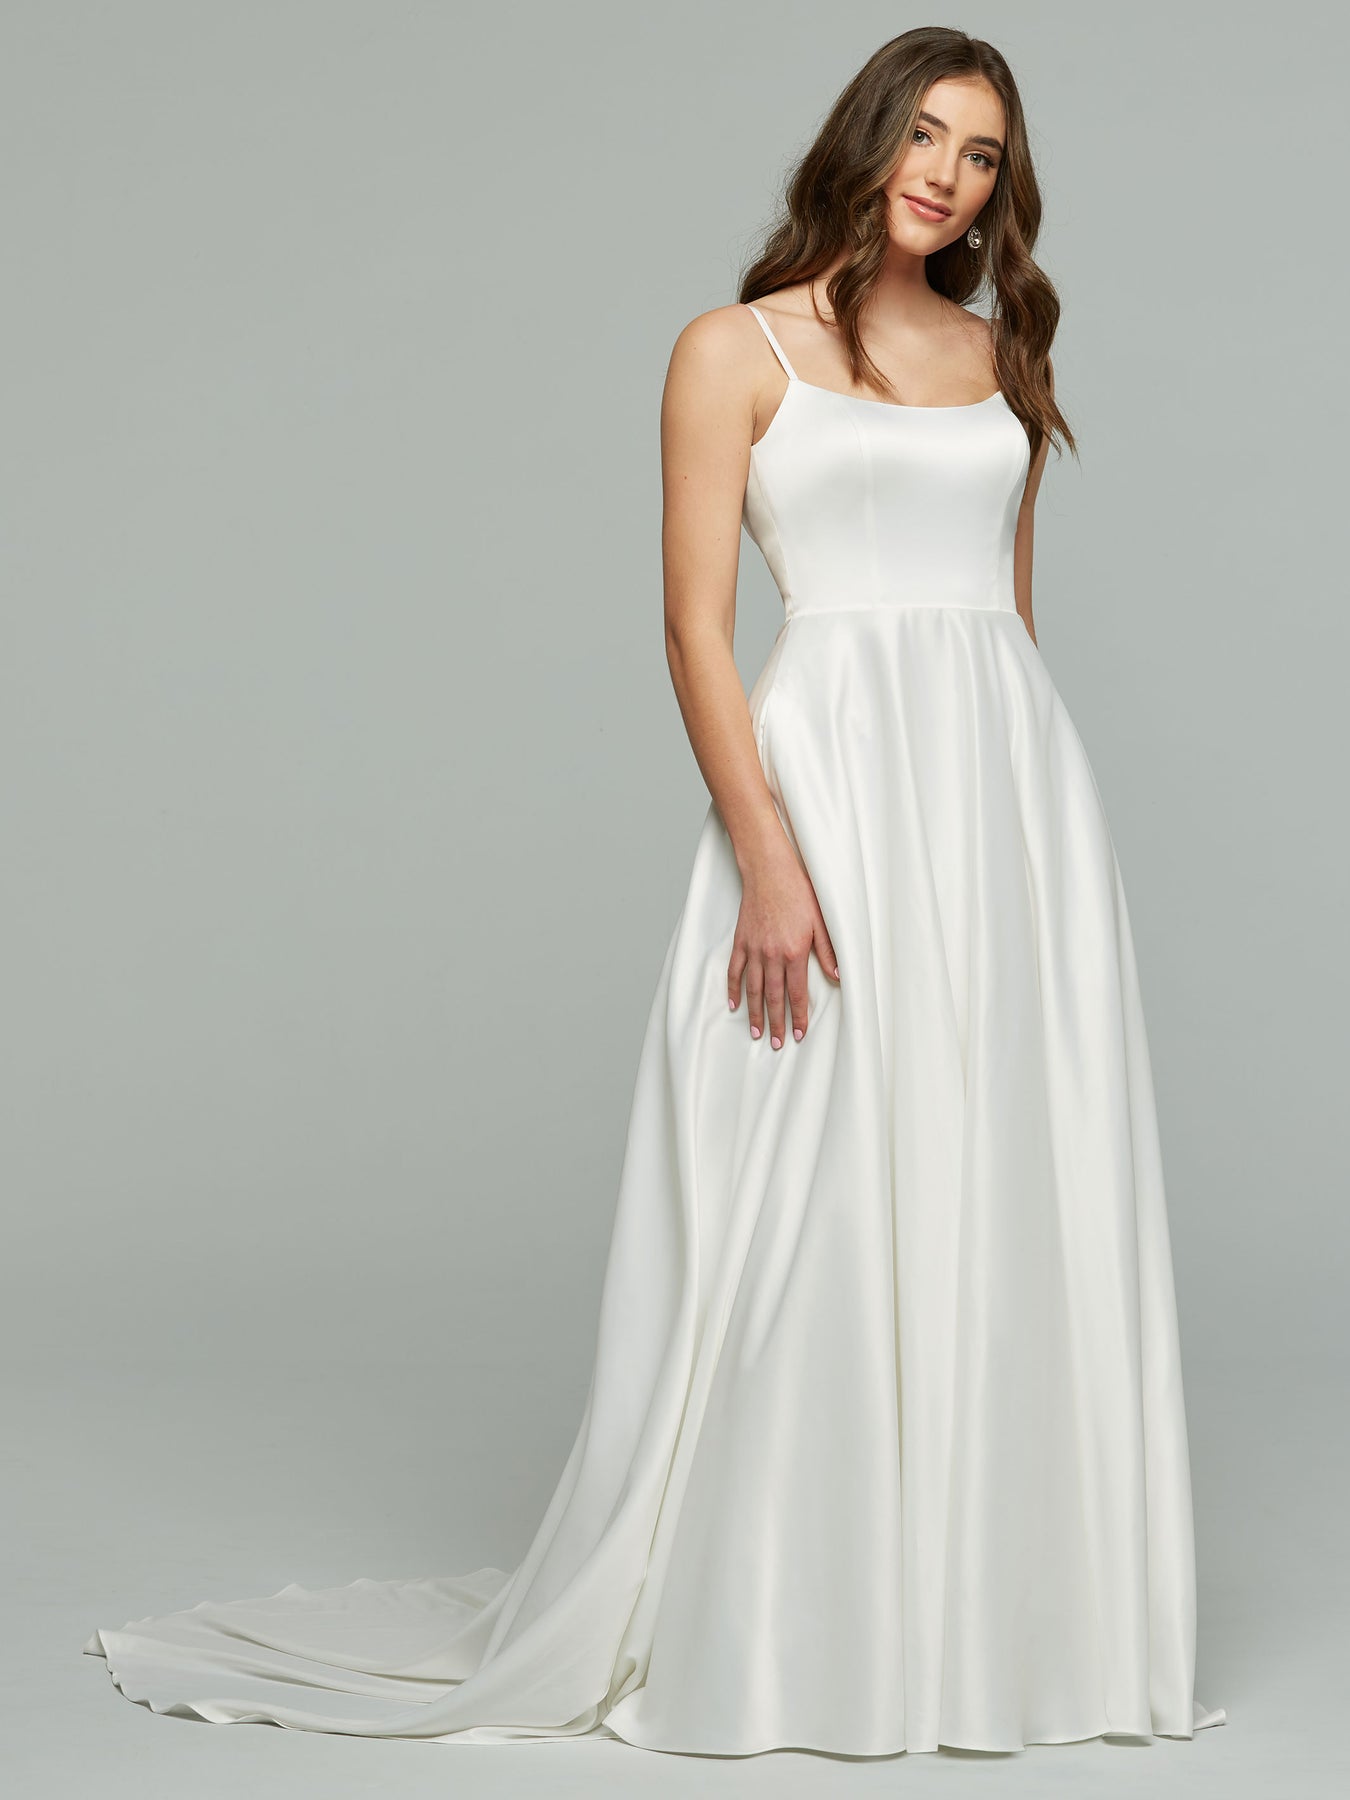 Giselle Simple Satin Wedding Dress - Avery Austin